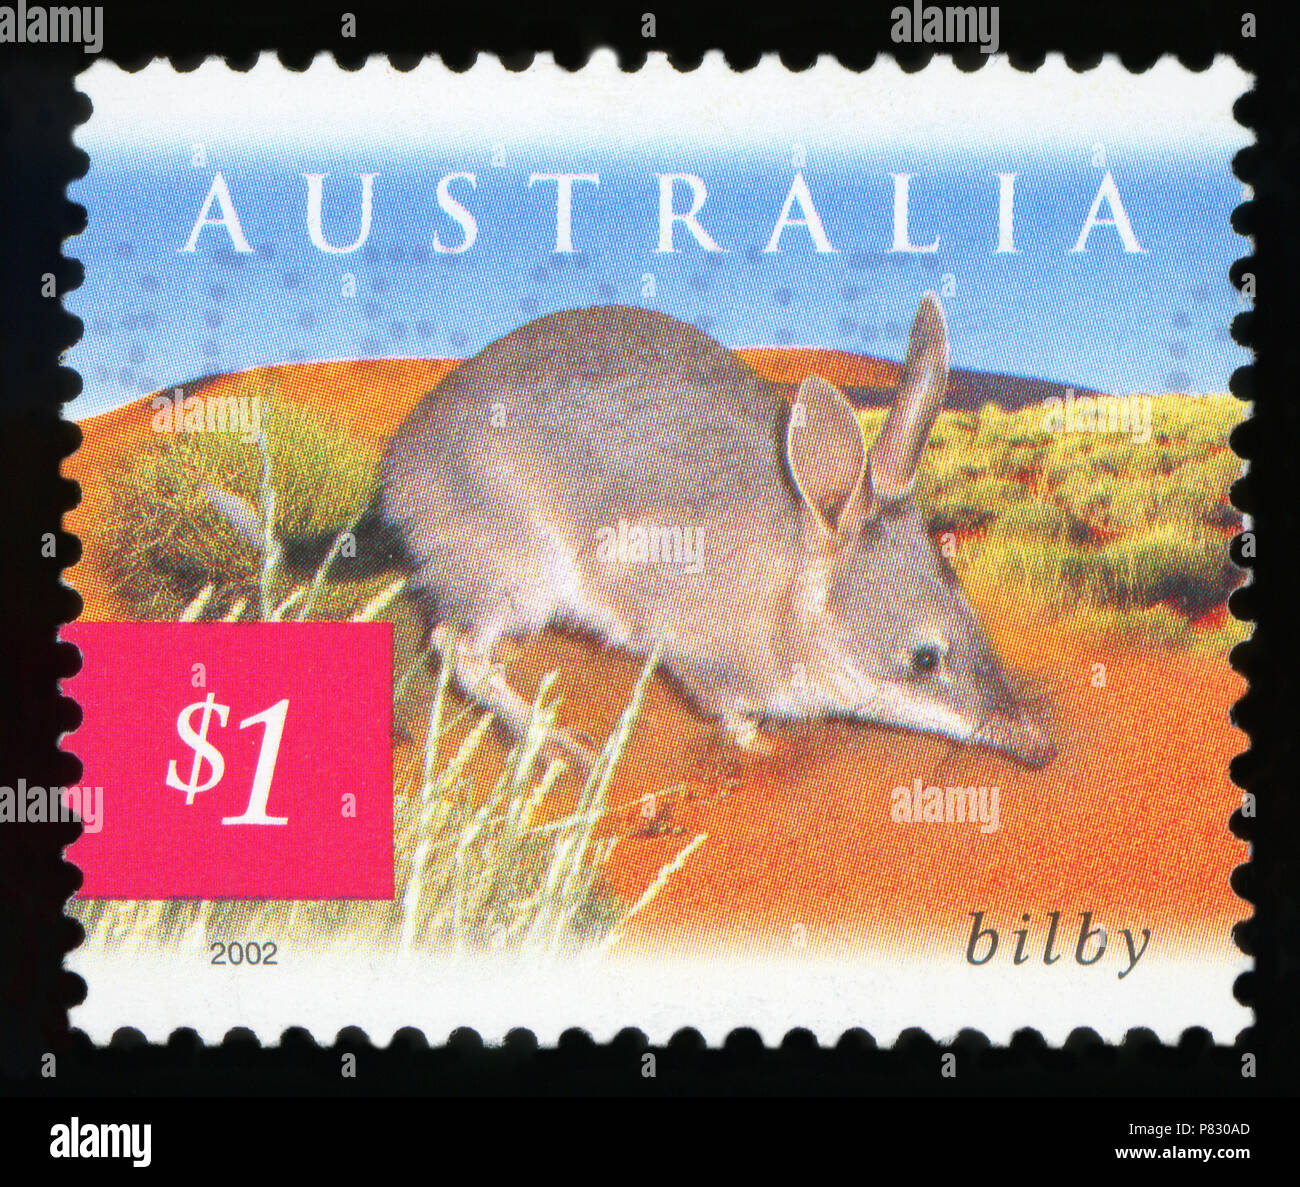 Australia - Sello - impreso en Australia muestra bilby, circa 2002 Foto de stock